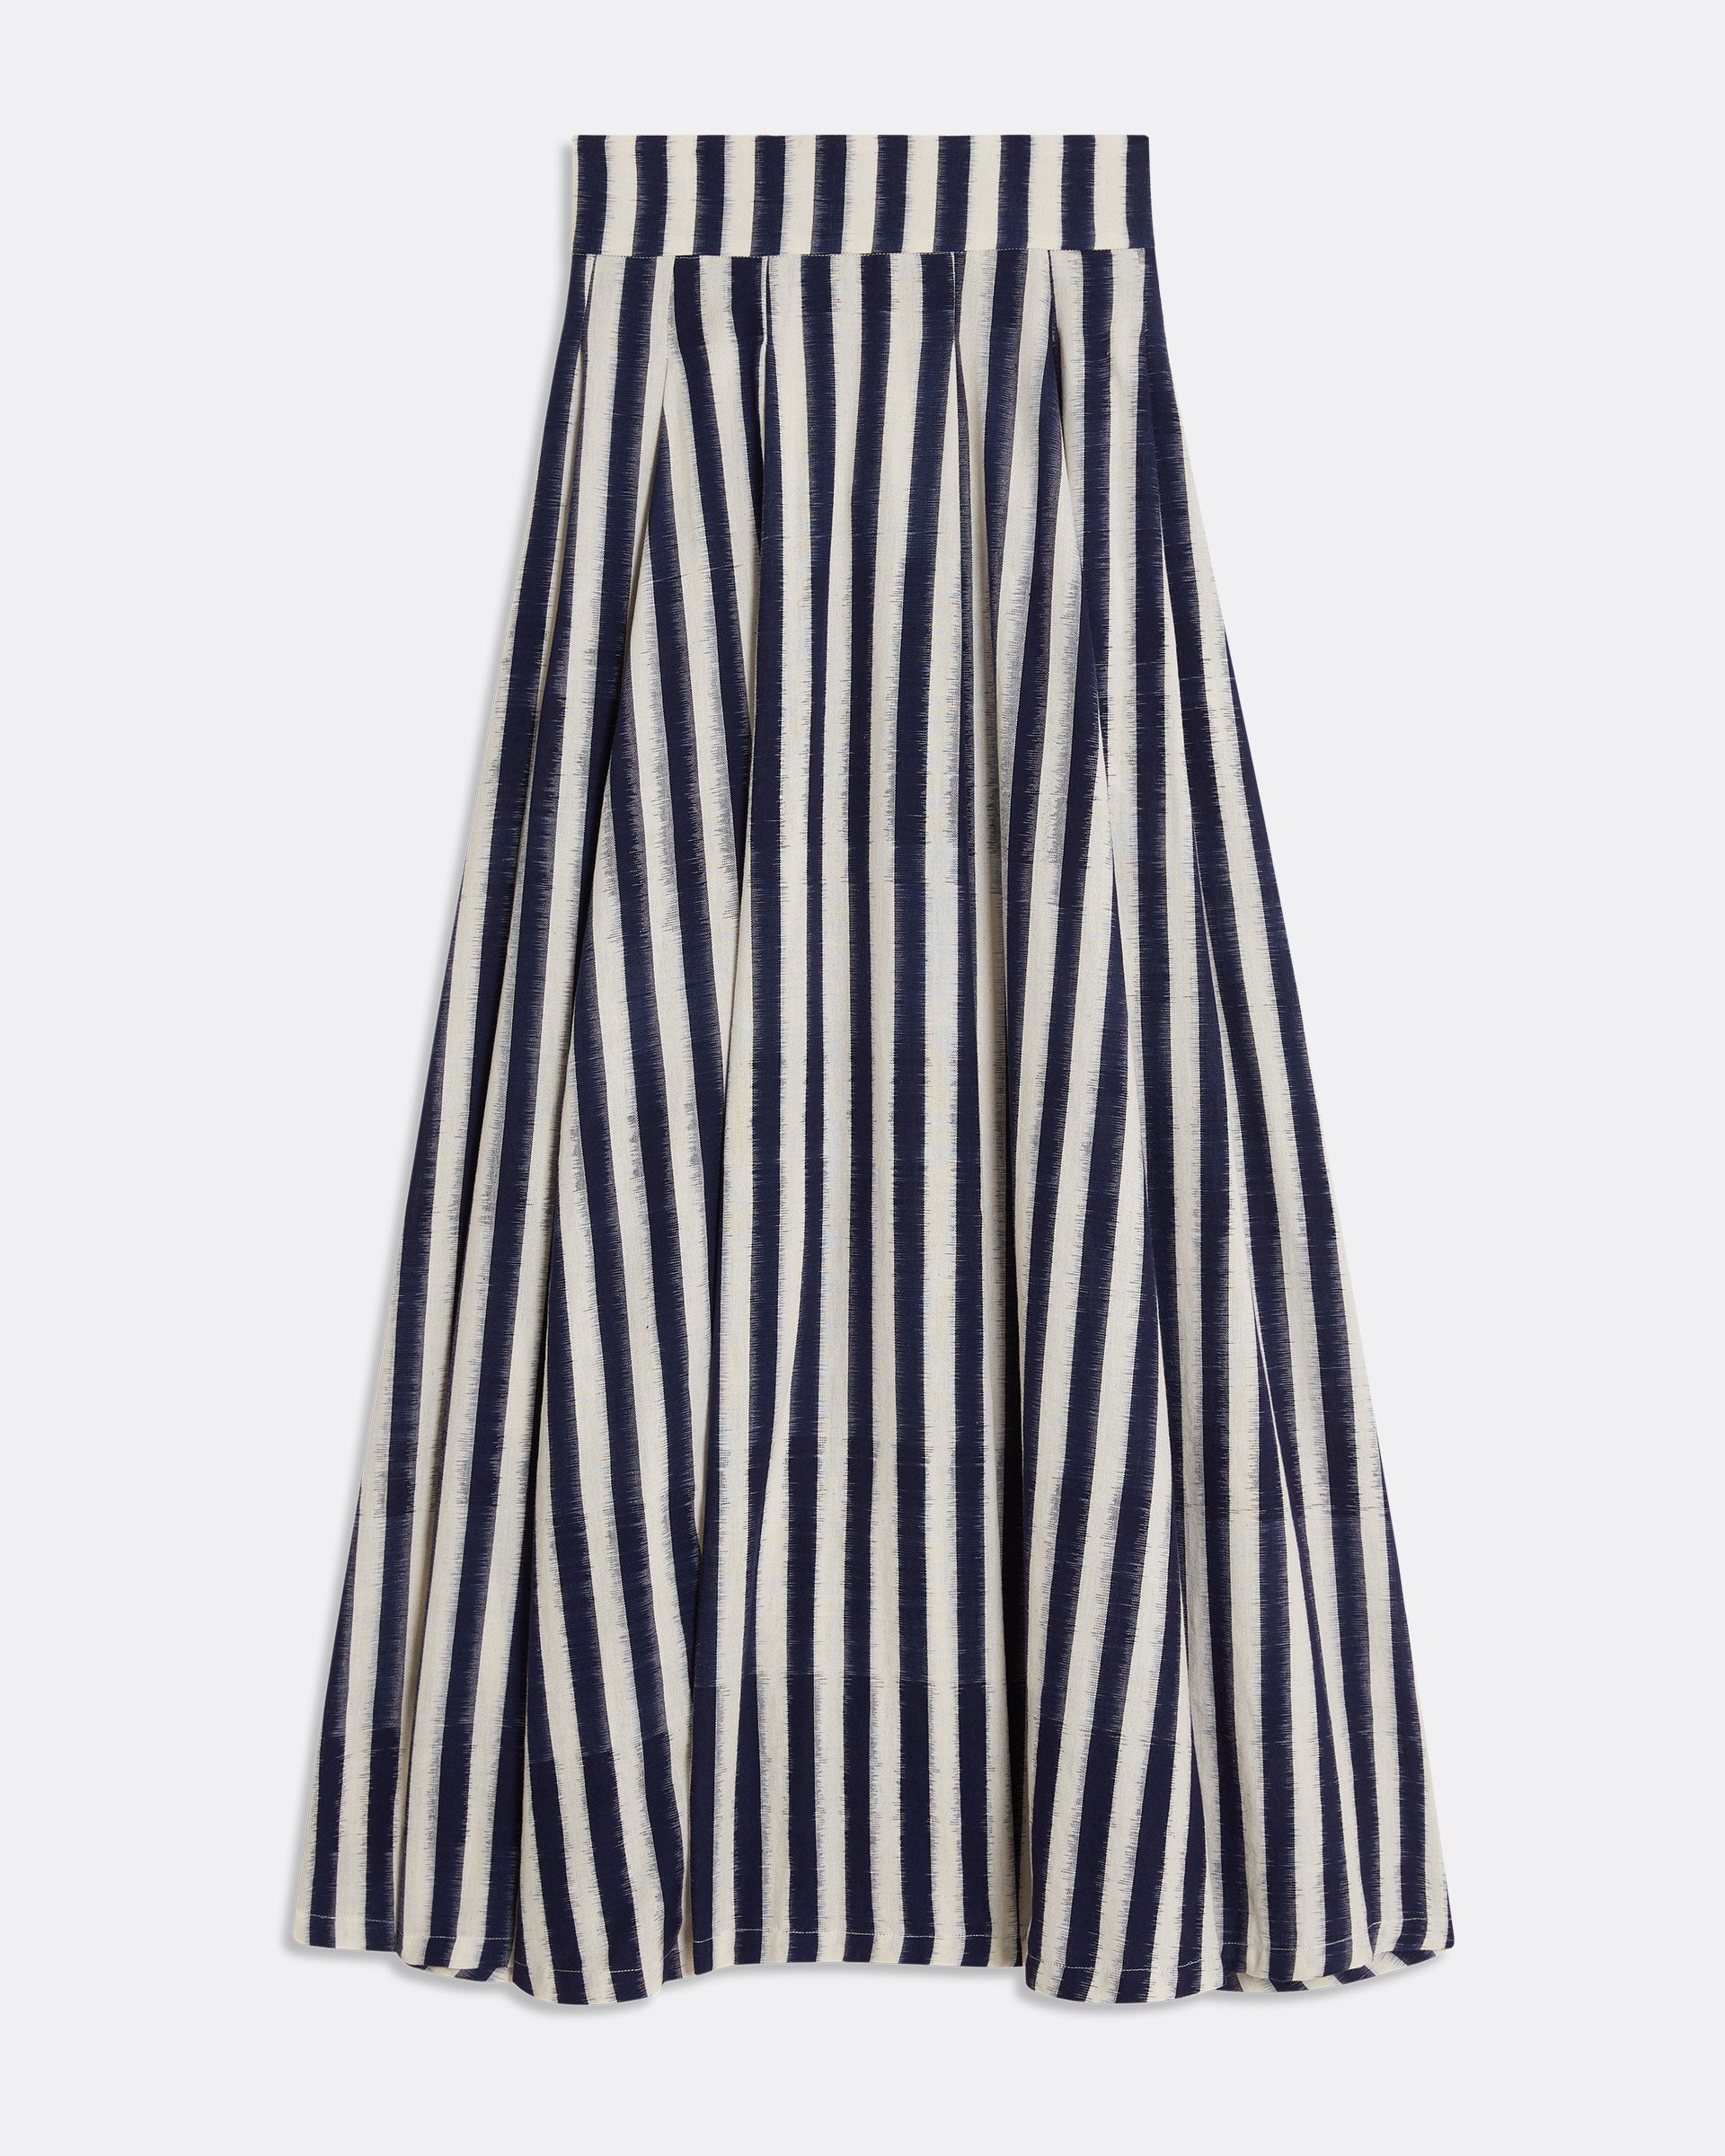 Flaminia Skirt in Ikat Stripes